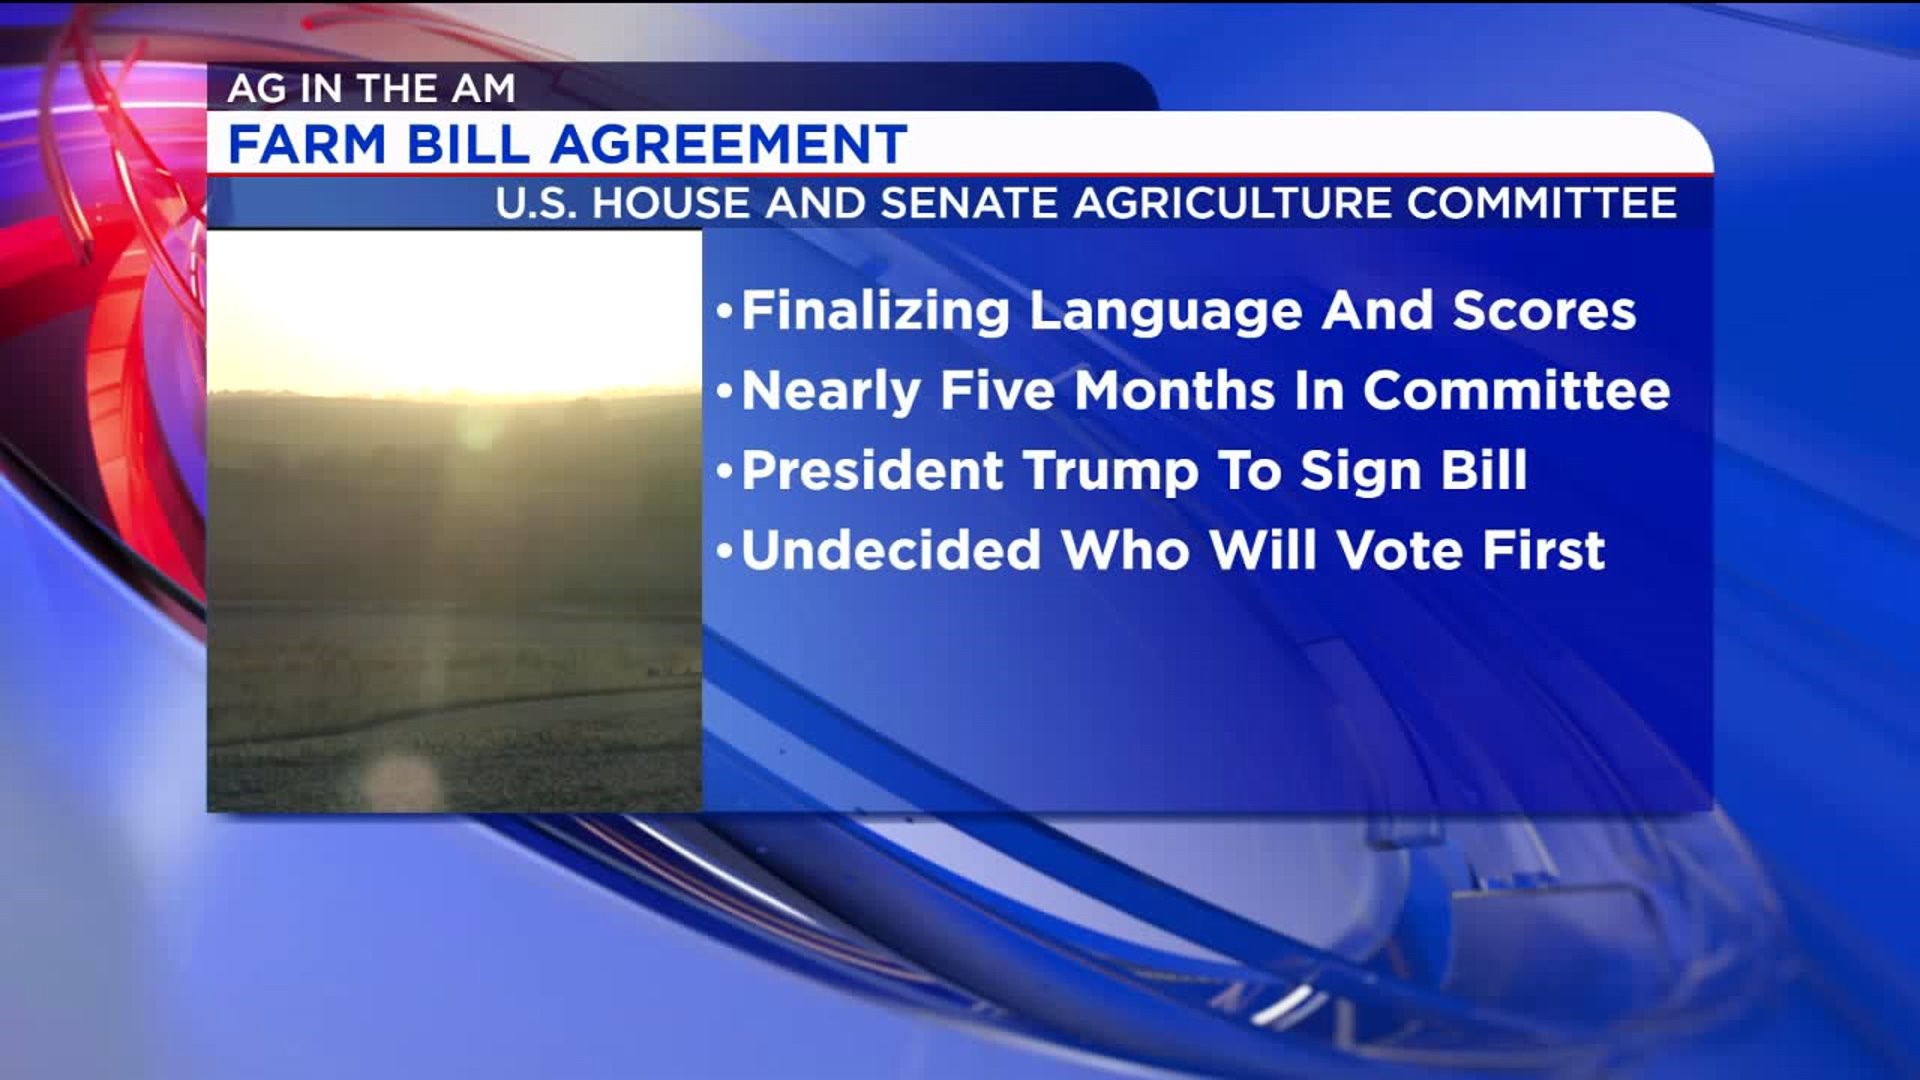 Tentative agreement reached on Farm Bill